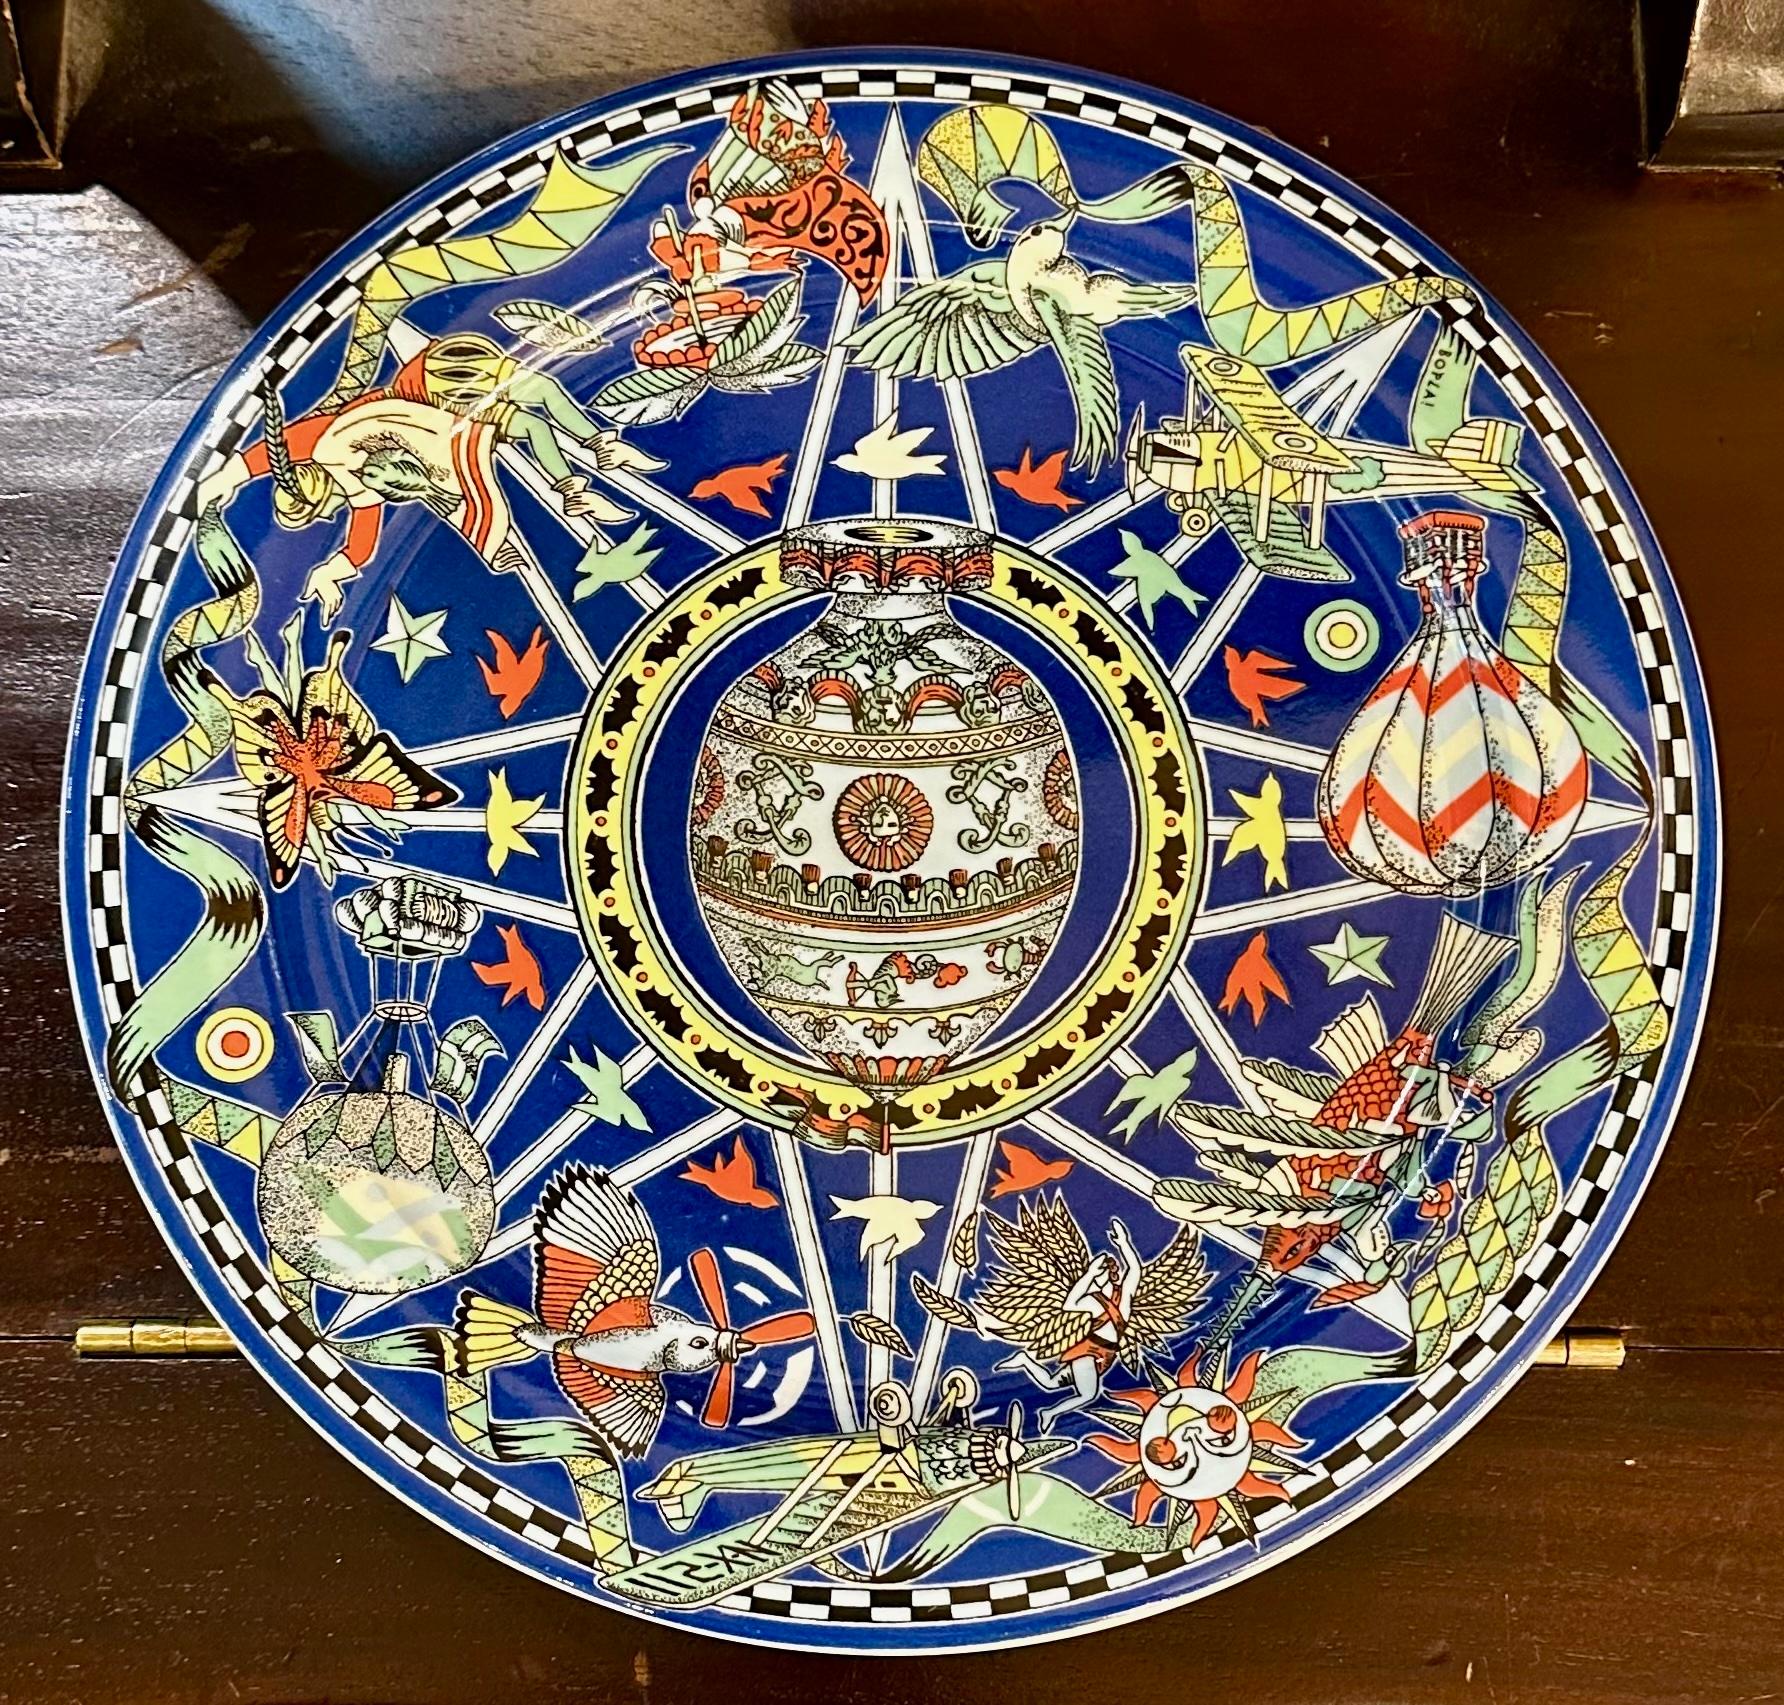 A 1990s Suisse Langenthal charger porcelain plate 